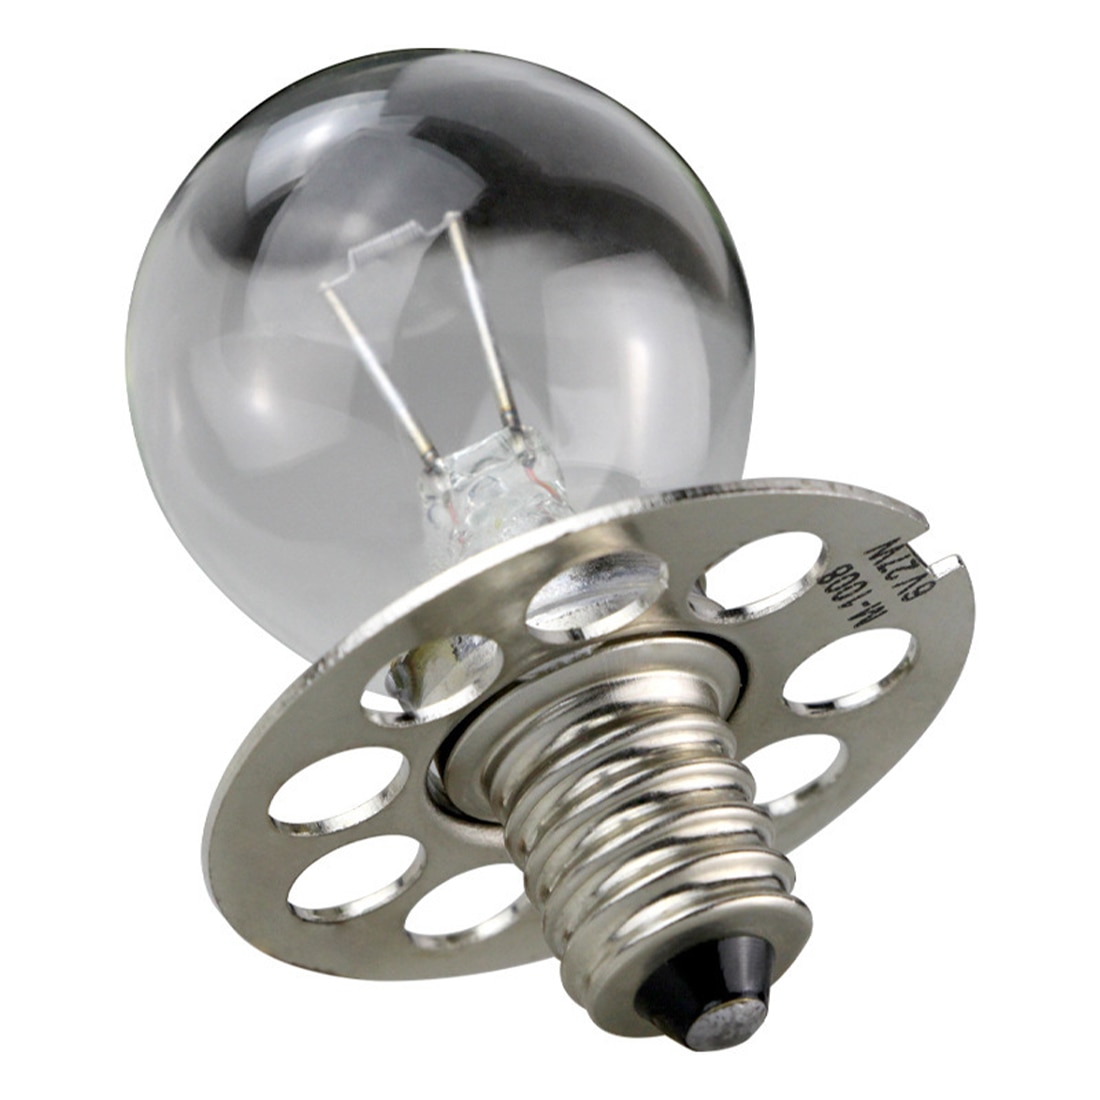 Replacement Bulb for HAAG Streit 900 Slit Lamp Bulb, 27W 6V E14 Incandescent Light Bulbs